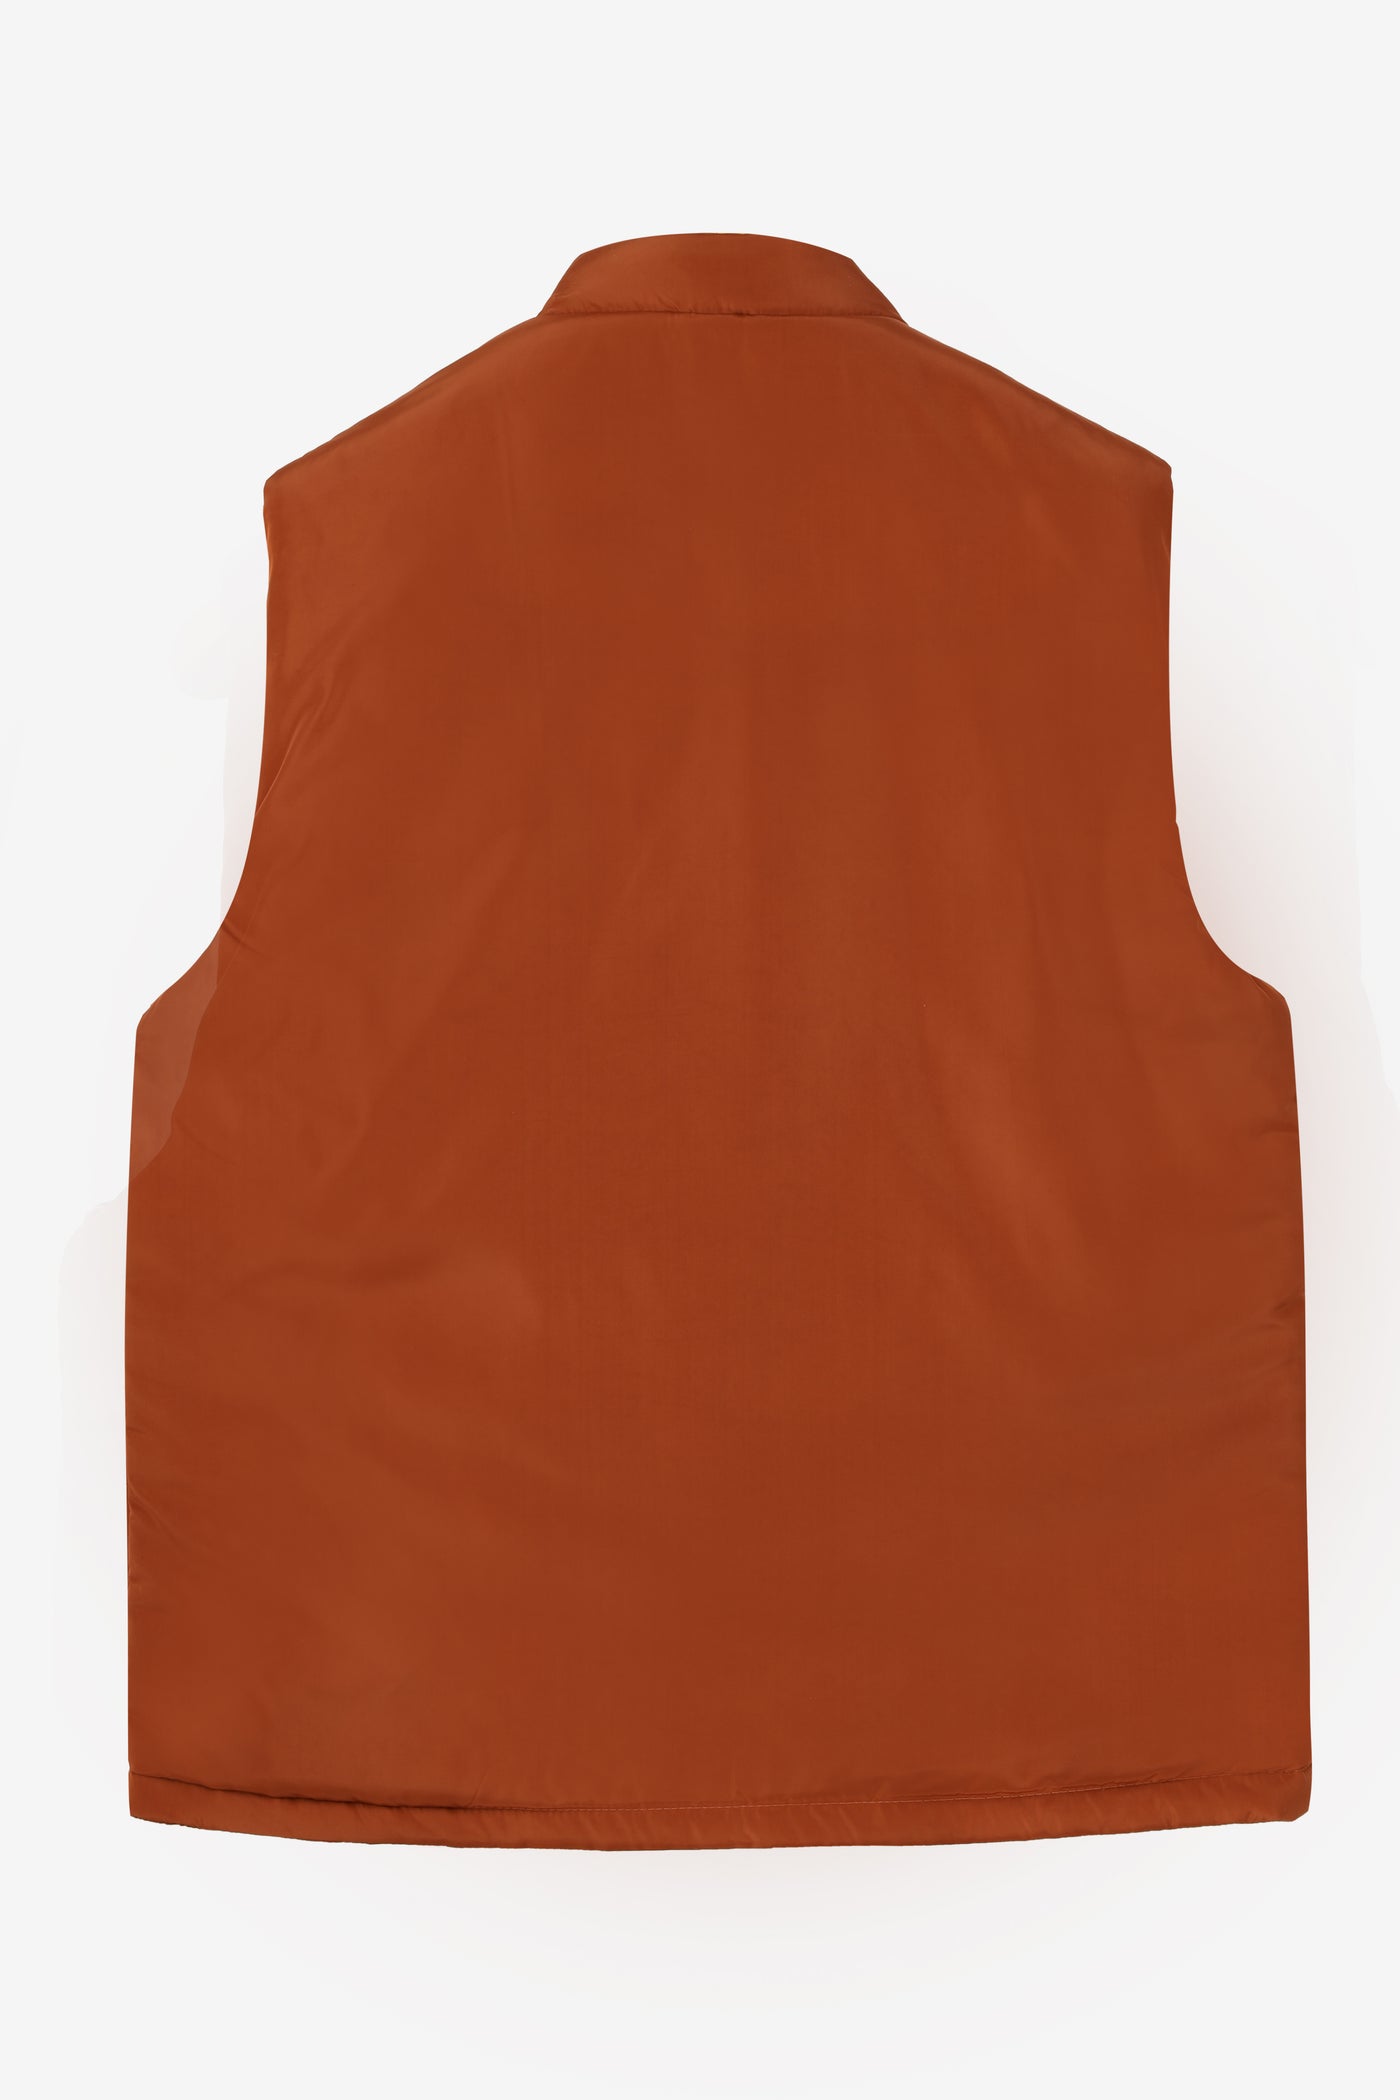 Waterproof Orange Vest Sweater